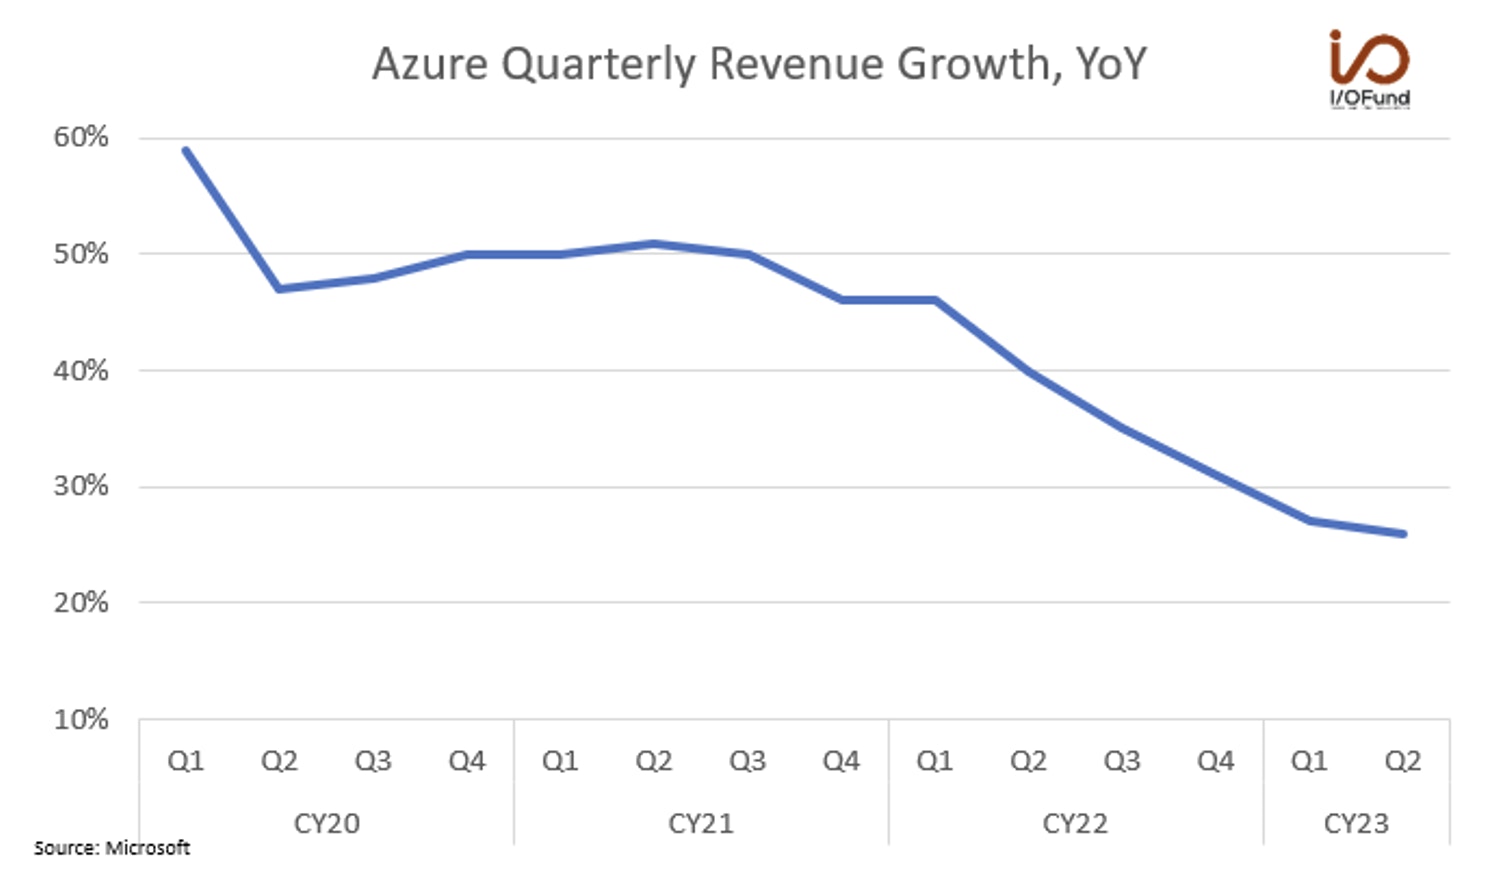 Azure's Quarterly Revenue Growth, YoY